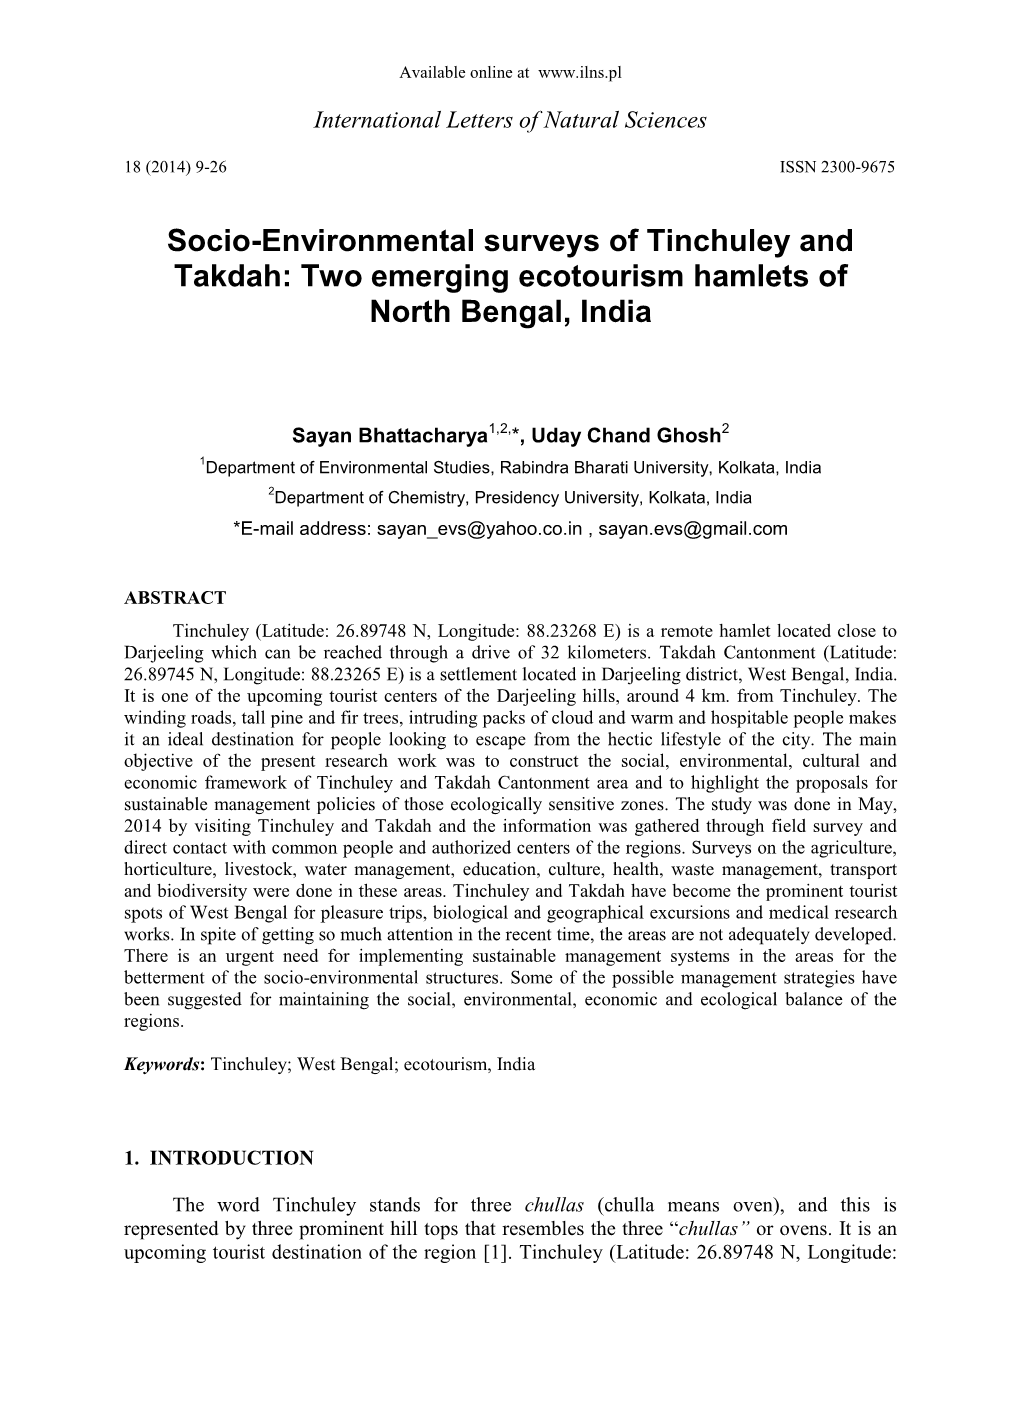 Socio-Environmental Surveys of Tinchuley and Takdah: Two Emerging Ecotourism Hamlets of North Bengal, India